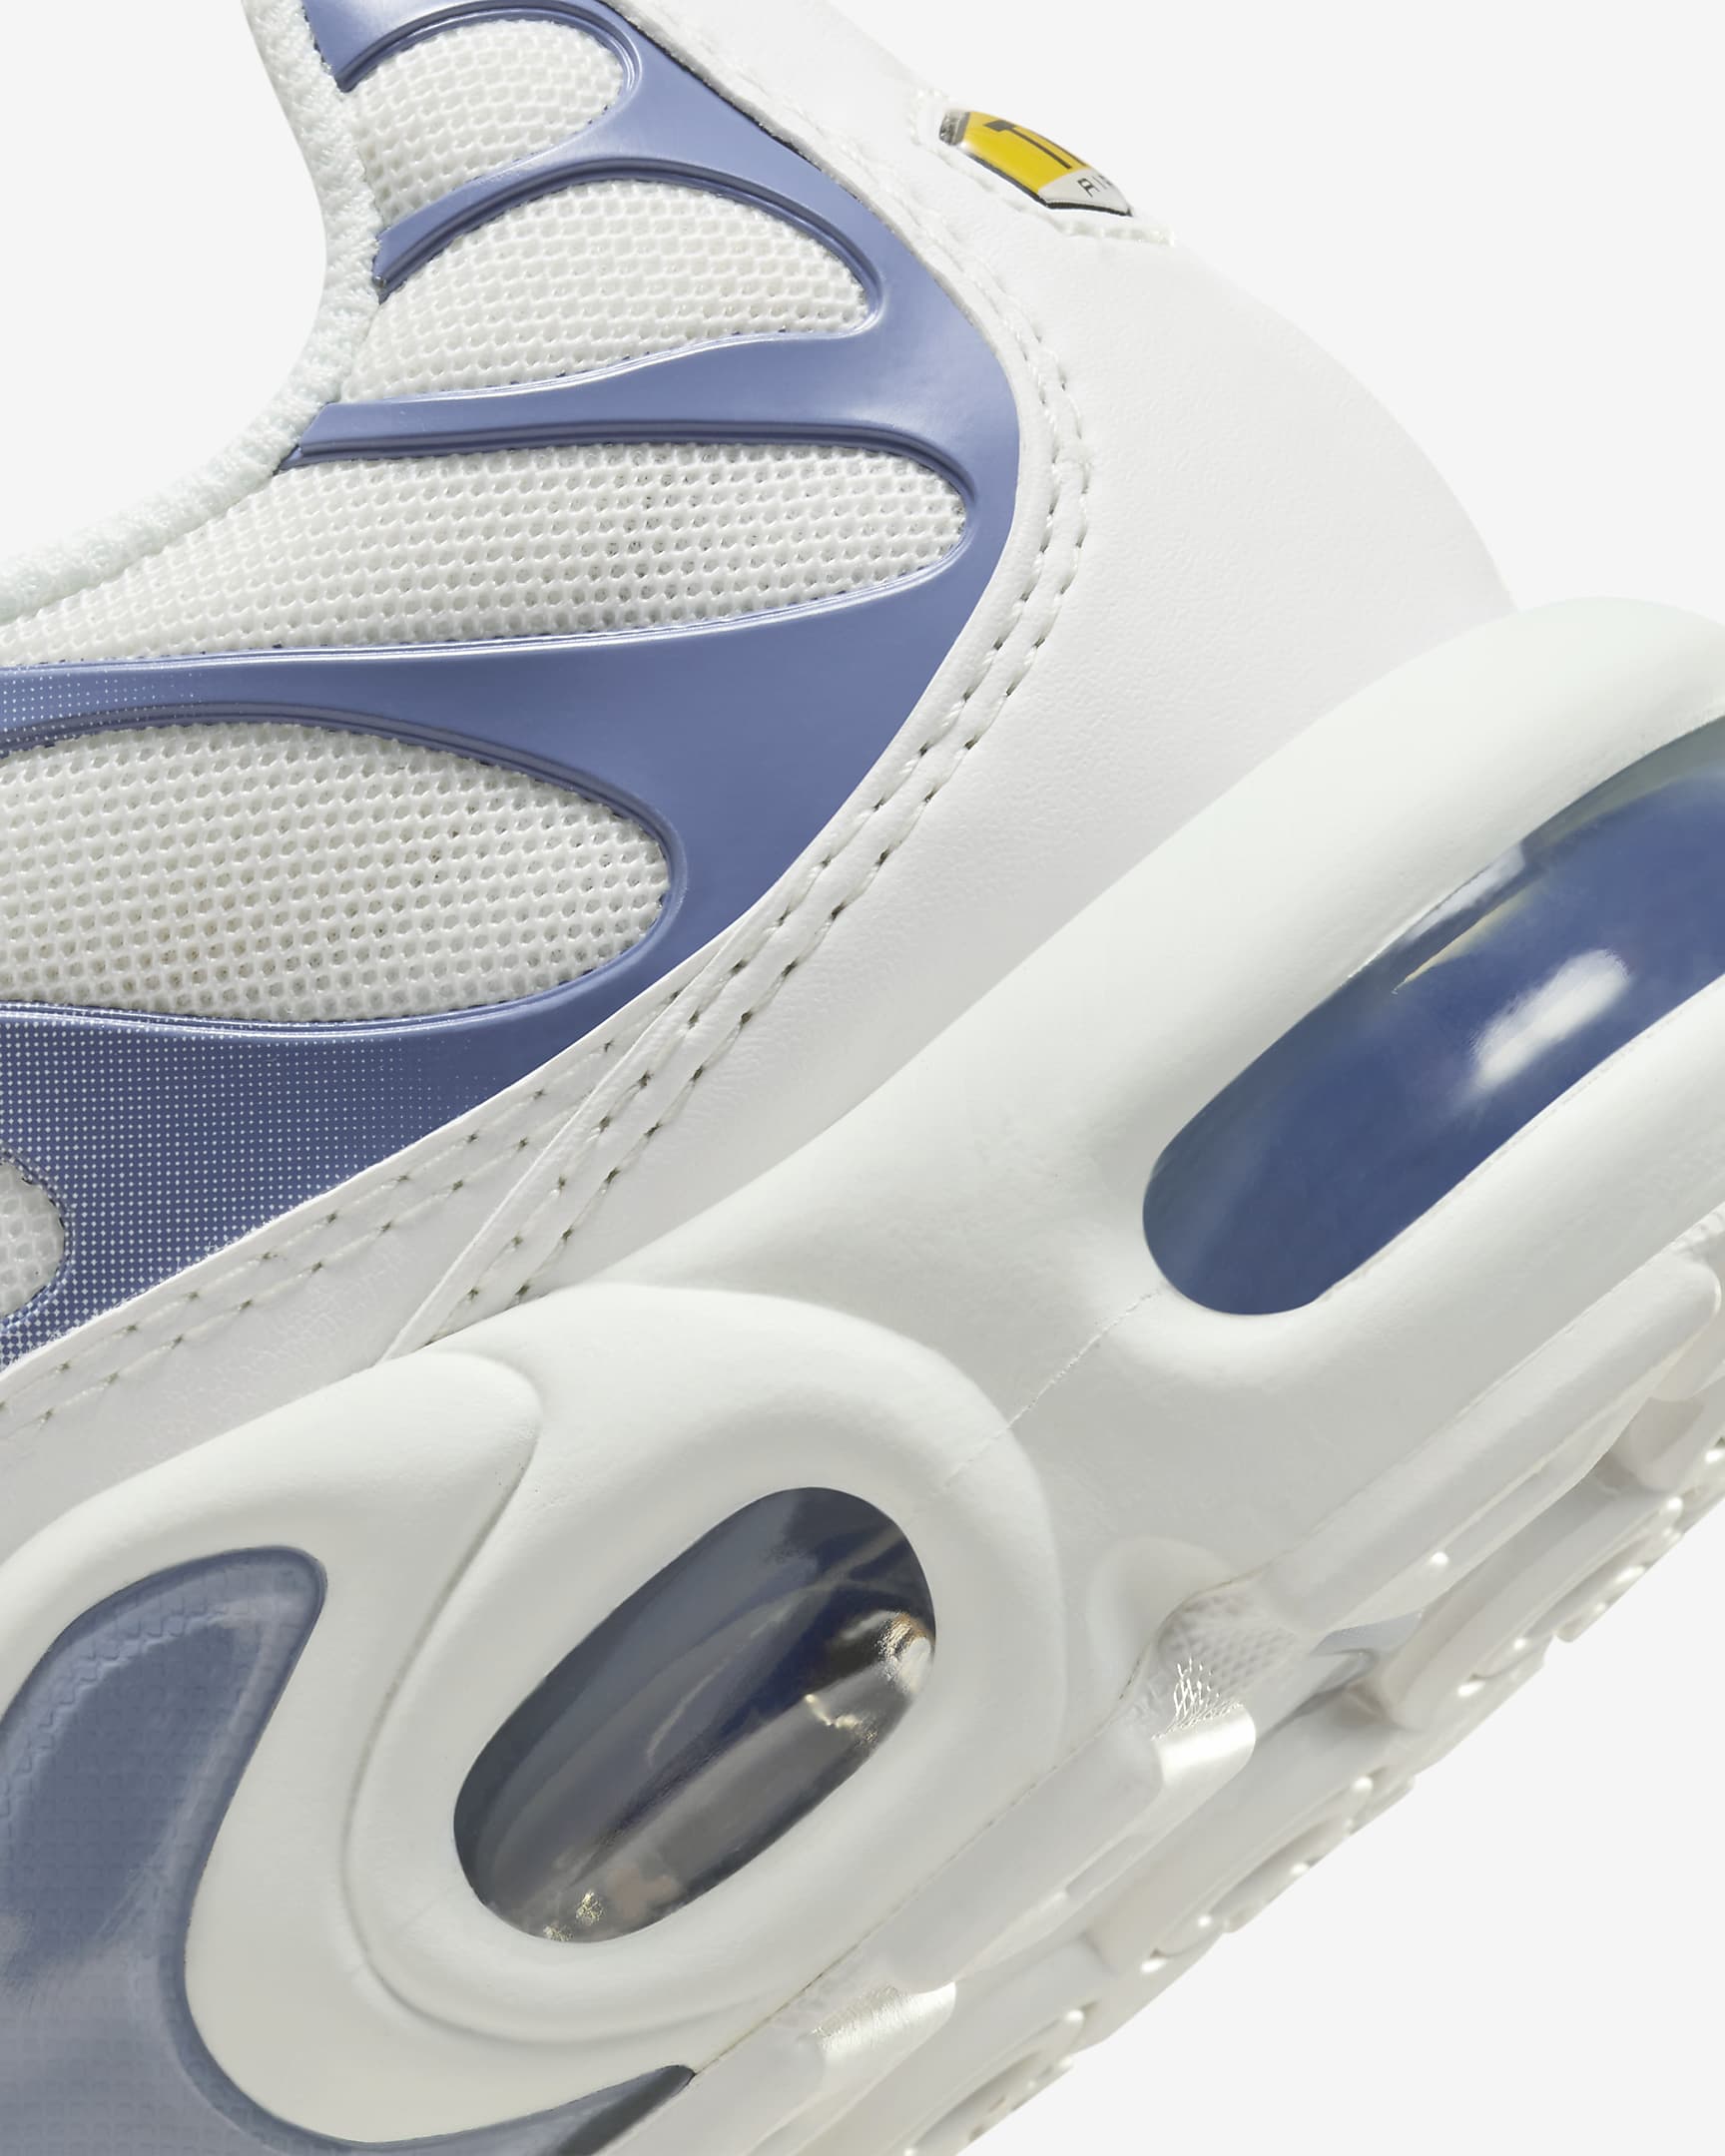 Calzado para mujer Nike Air Max Plus - Blanco cumbre/Azul militar claro/Gris fútbol/Pizarra cenizo